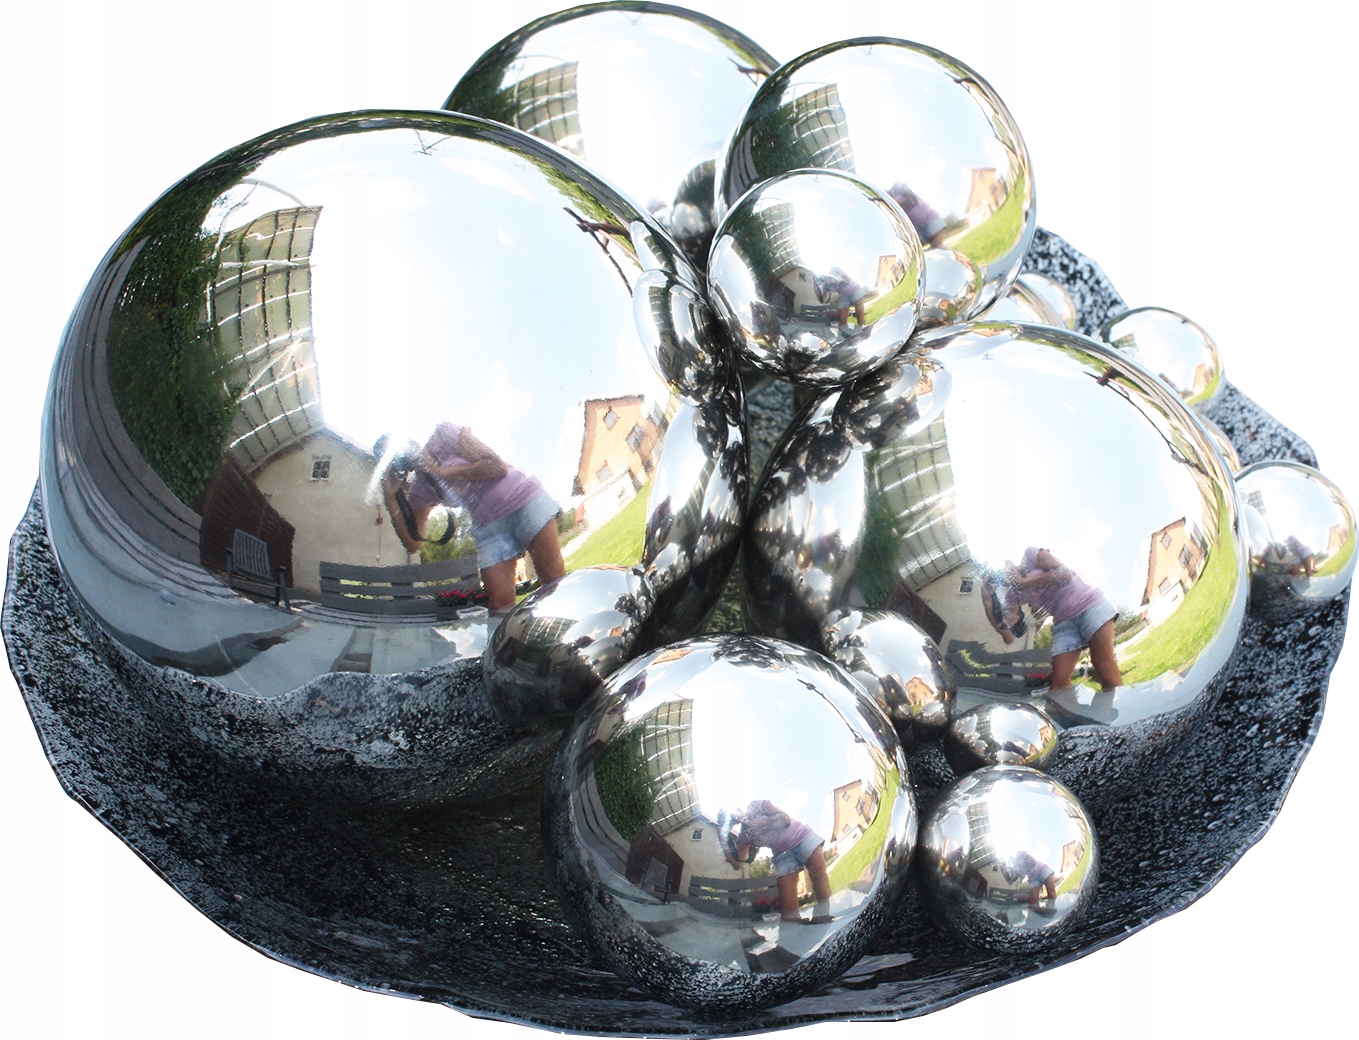 Шар хром серебро. Шар хром Platinum, серебро / Silver. Металлический шар. Хромированный металлический шар. Декор металлические шары.